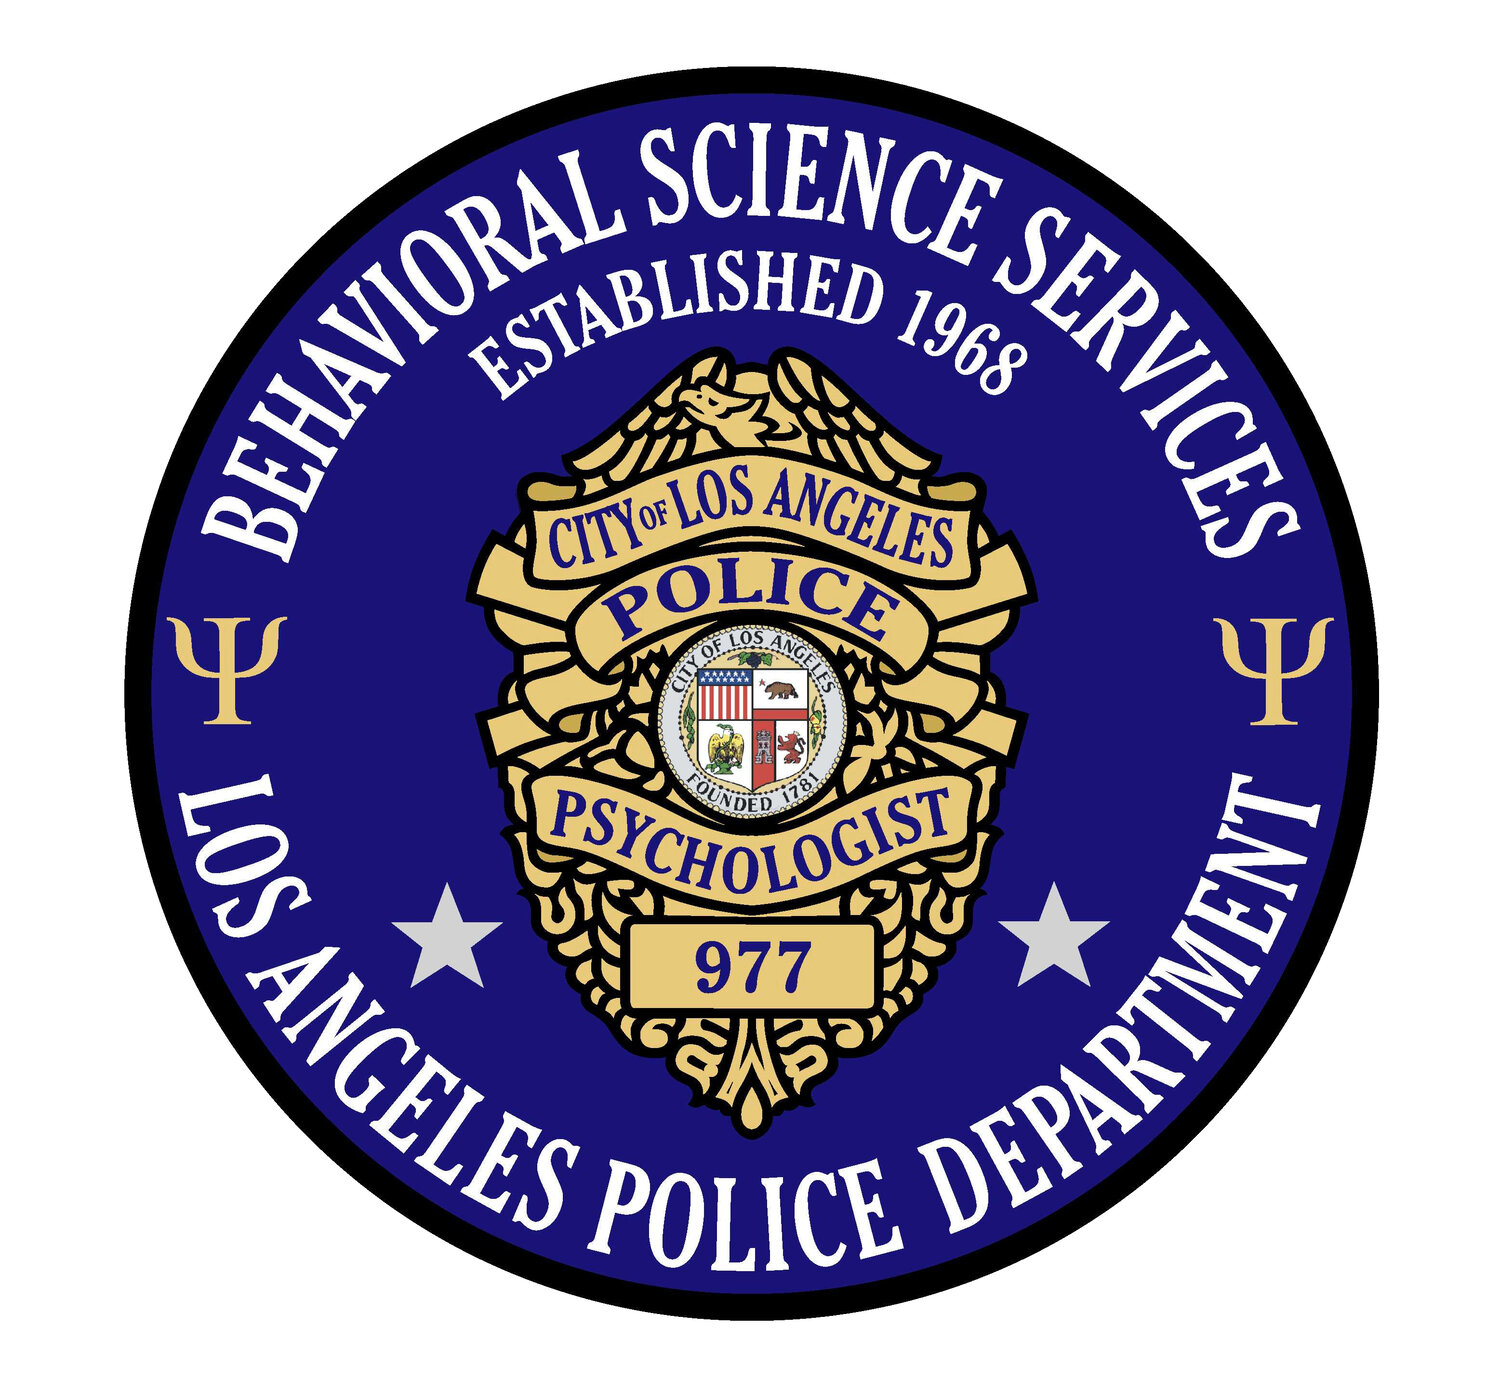 LAPD Behavioral Science Services